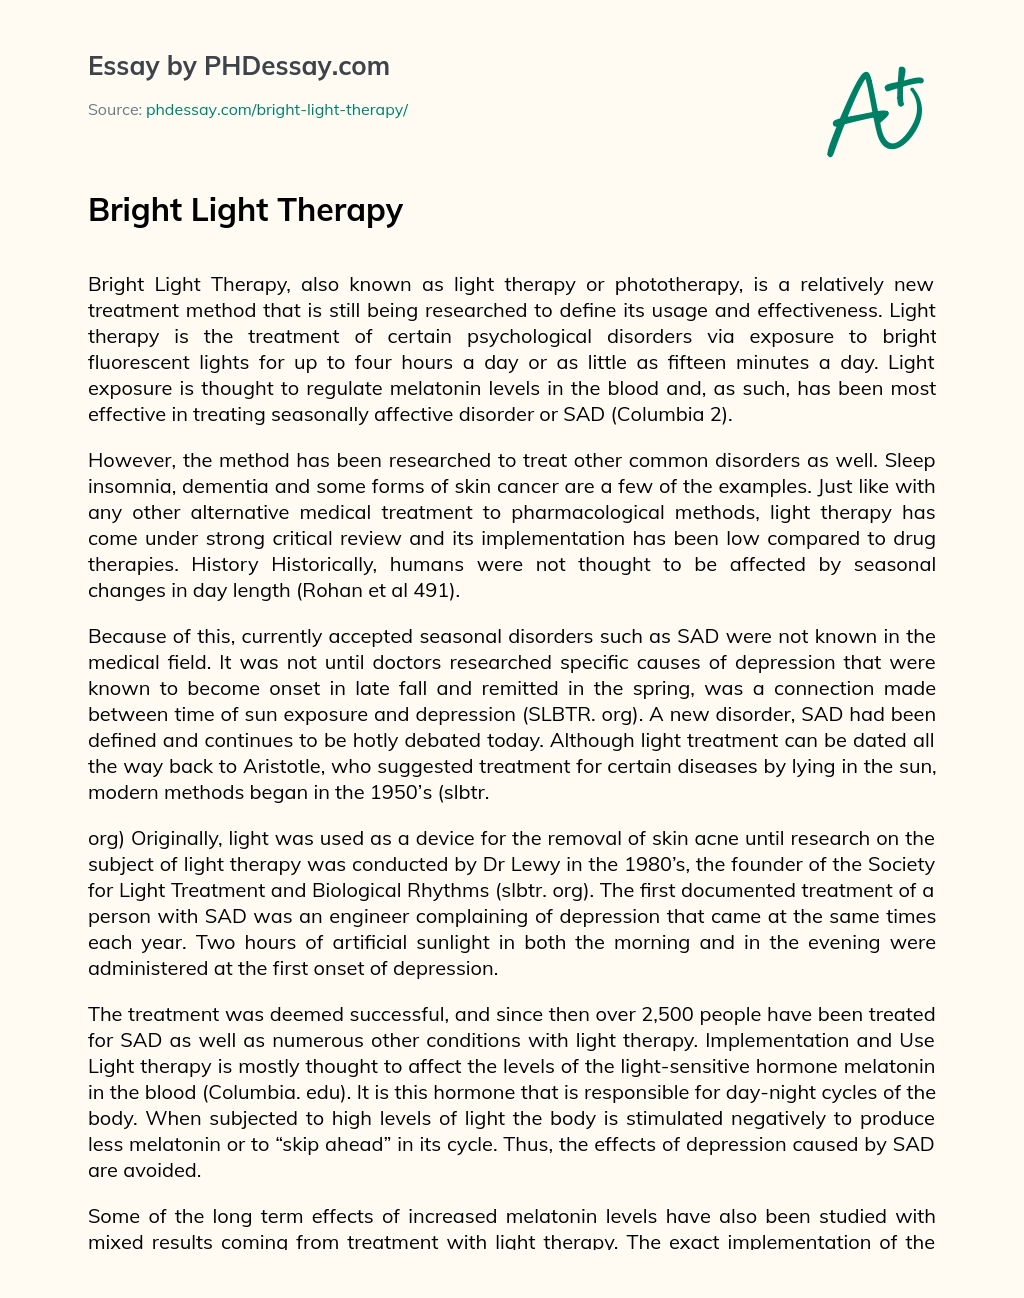 Bright Light Therapy essay